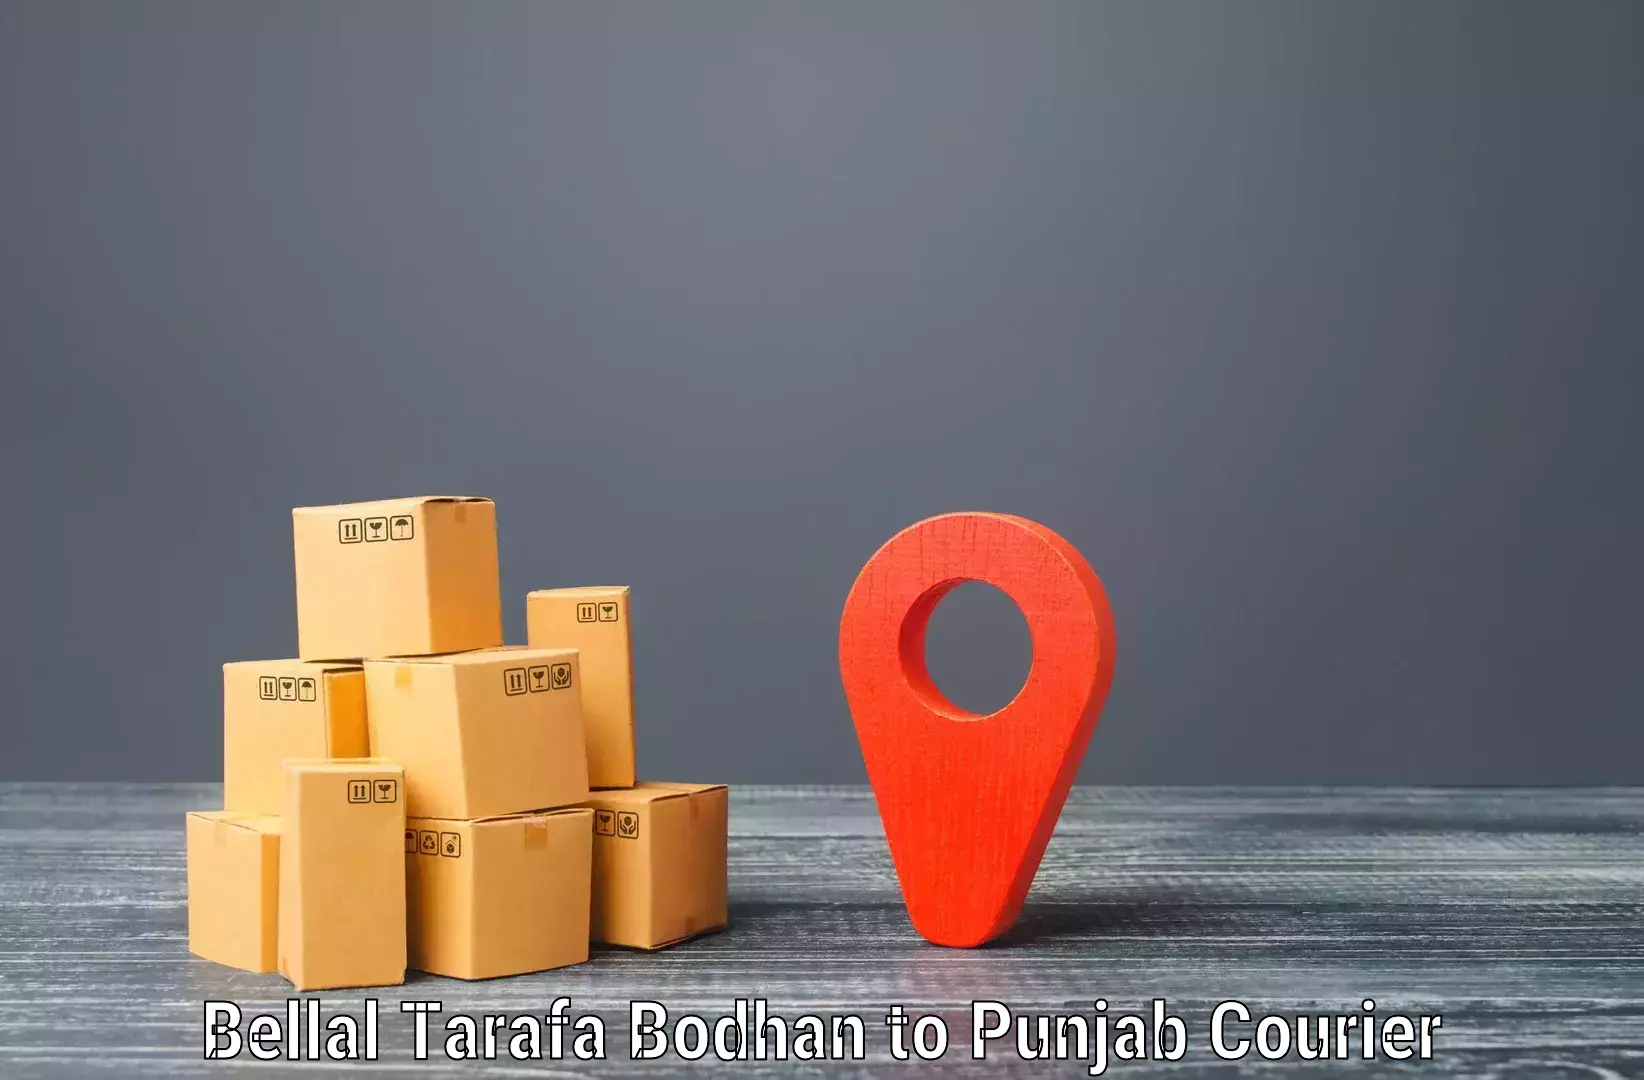 24/7 courier service Bellal Tarafa Bodhan to Sultanpur Lodhi